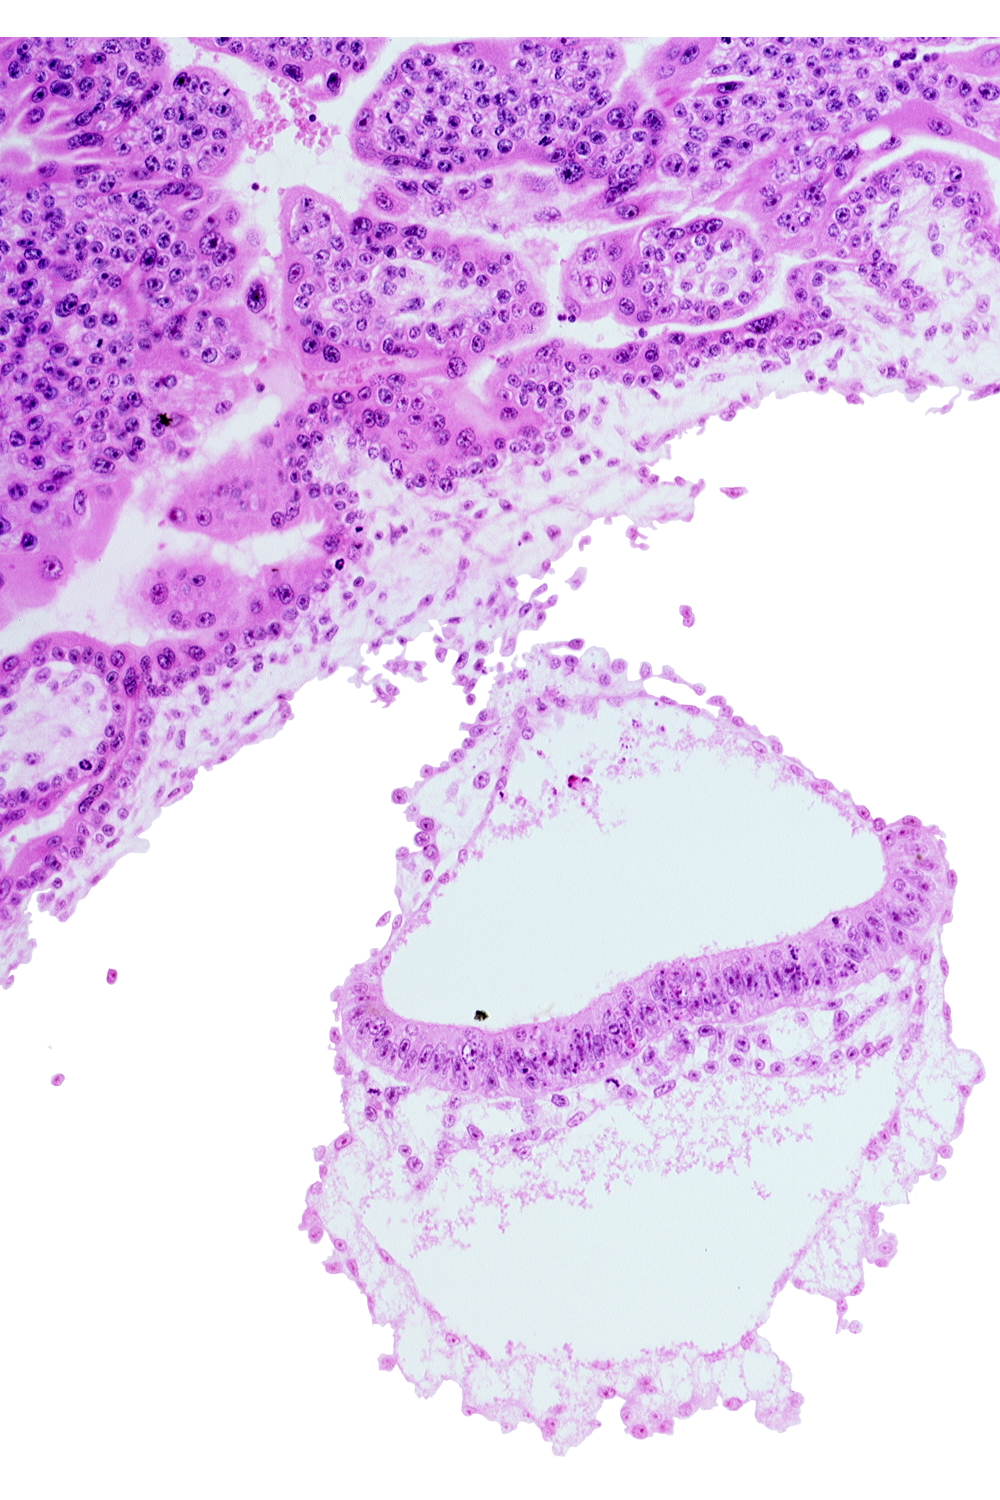 amniotic mesenchyme, epiblast, hemangiogenic tissue, hypoblast, junction of embryonic and extra-embryonic mesoblast, notochordal process, presumptive neural plate, two-layered amnion, umbilical vesicle wall